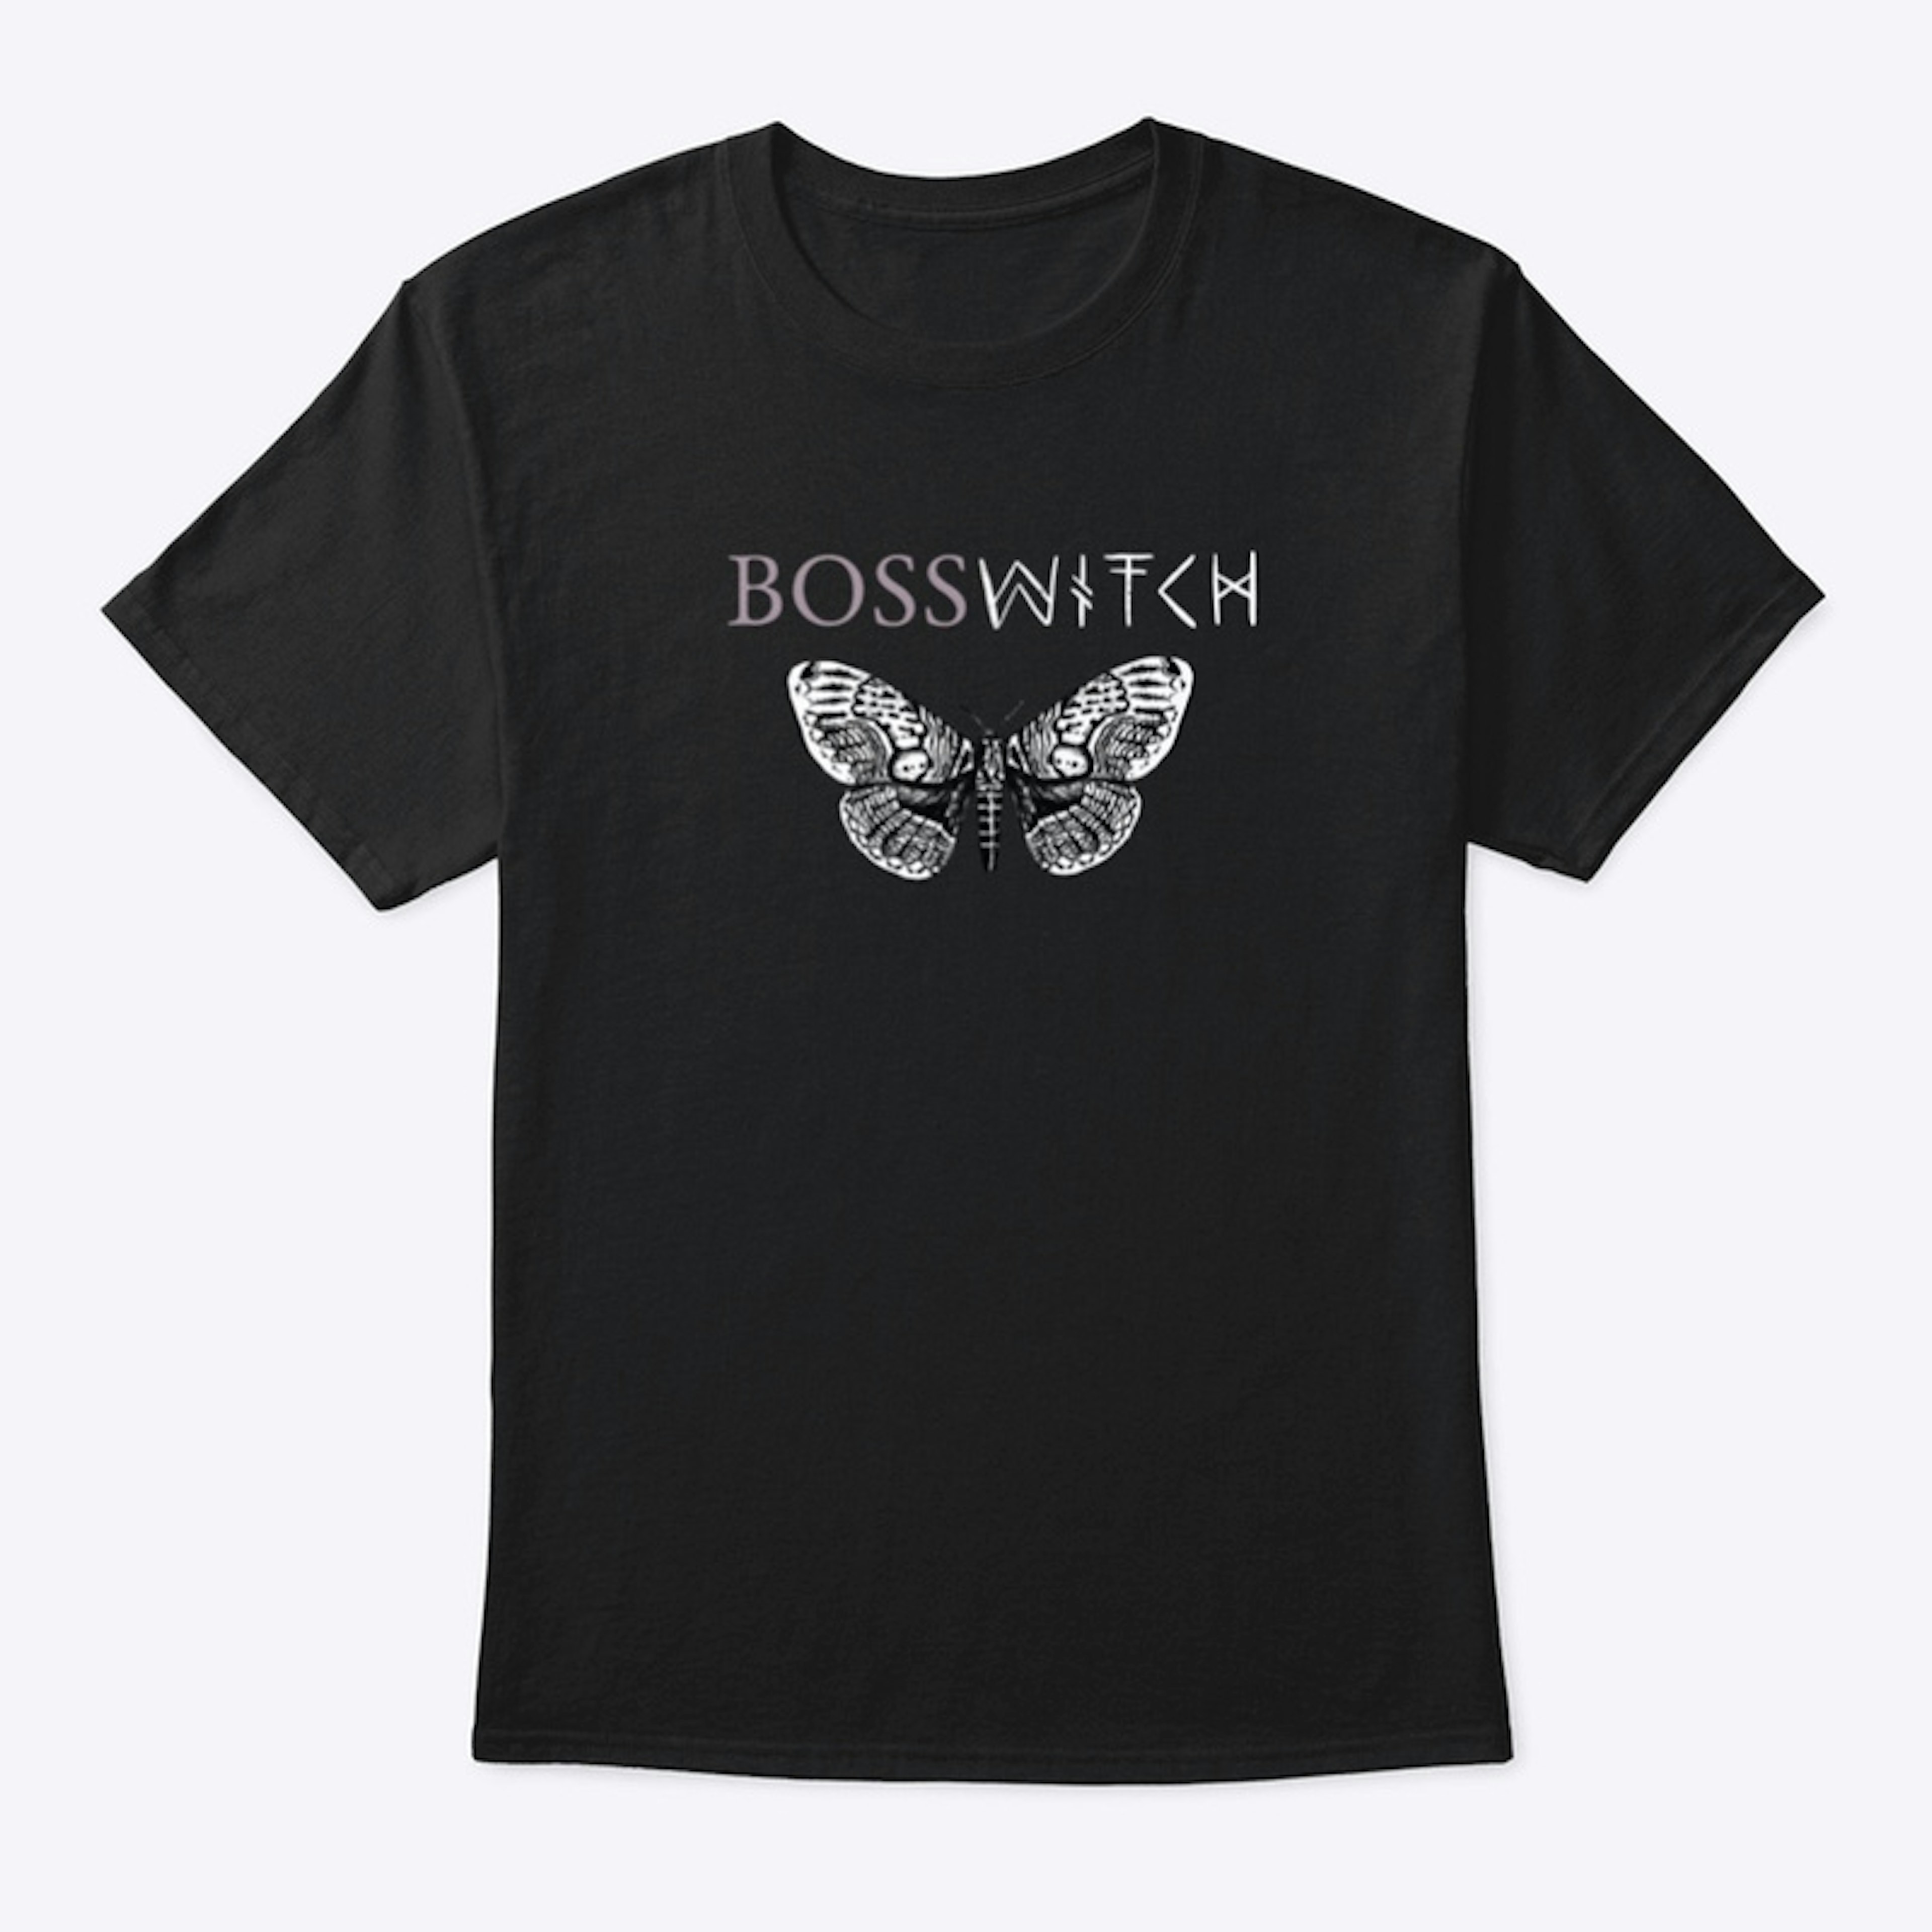 Unisex/Men's BossWitch Tee